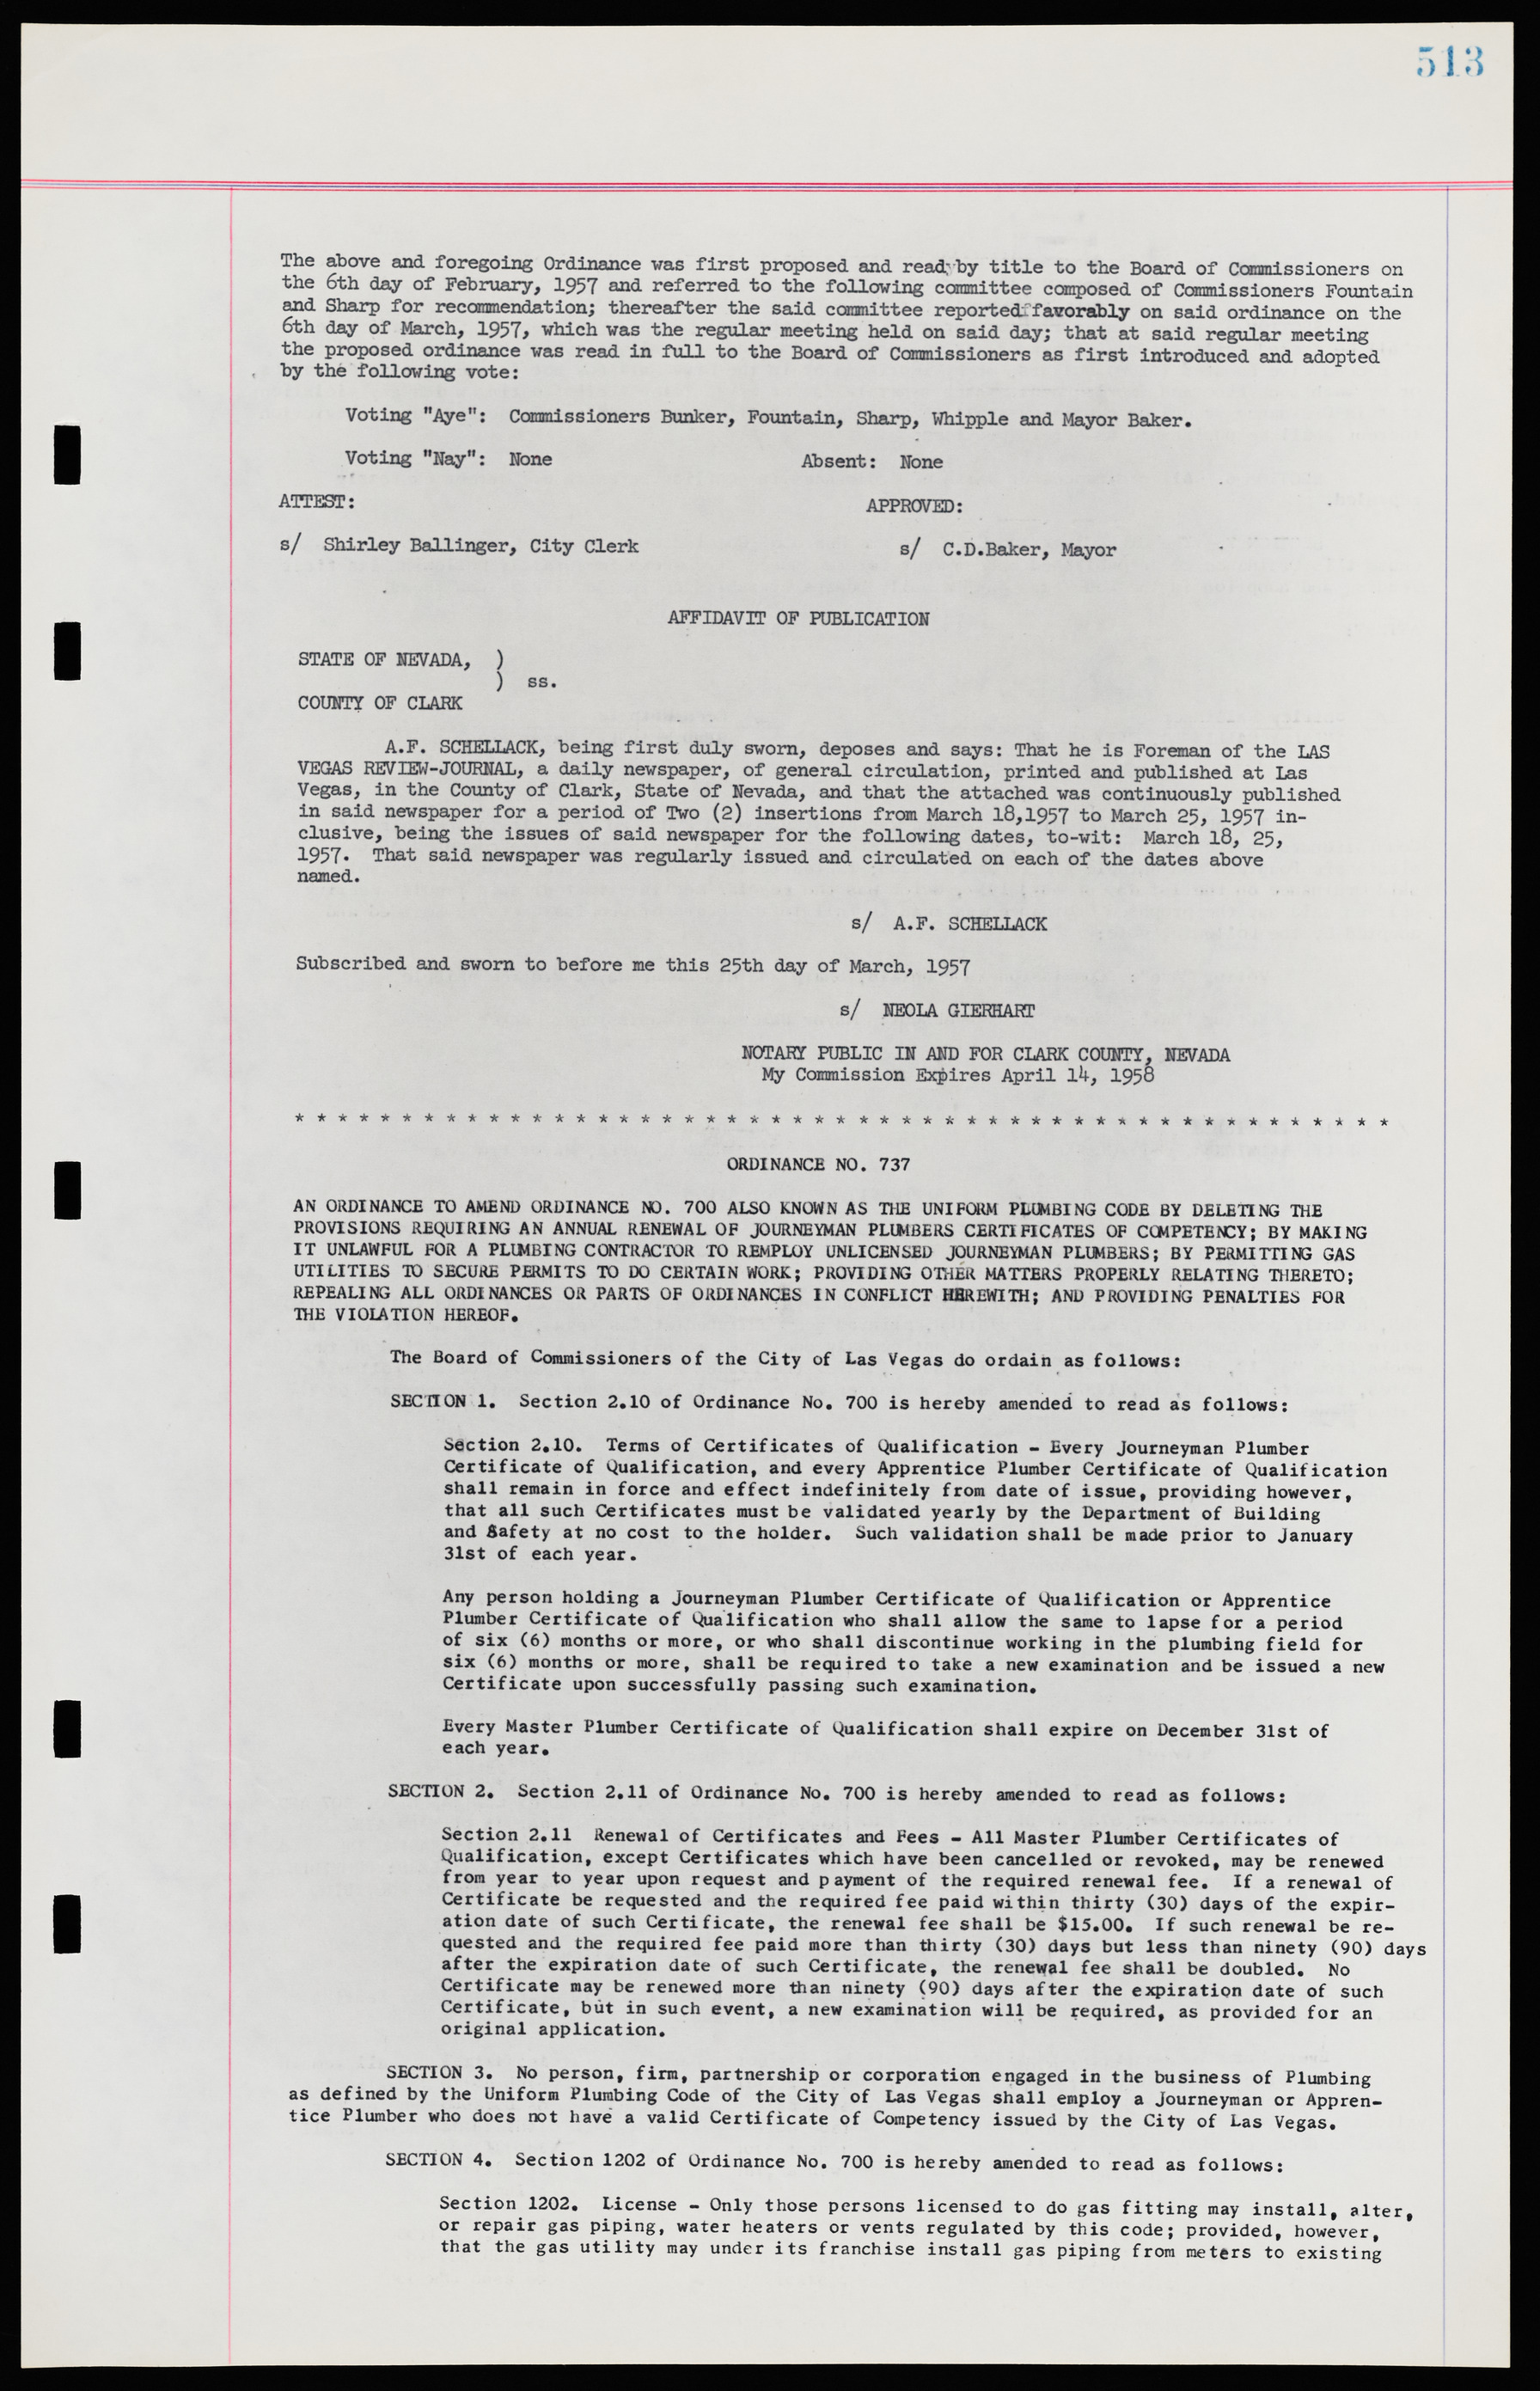 Las Vegas City Ordinances, November 13, 1950 to August 6, 1958, lvc000015-521